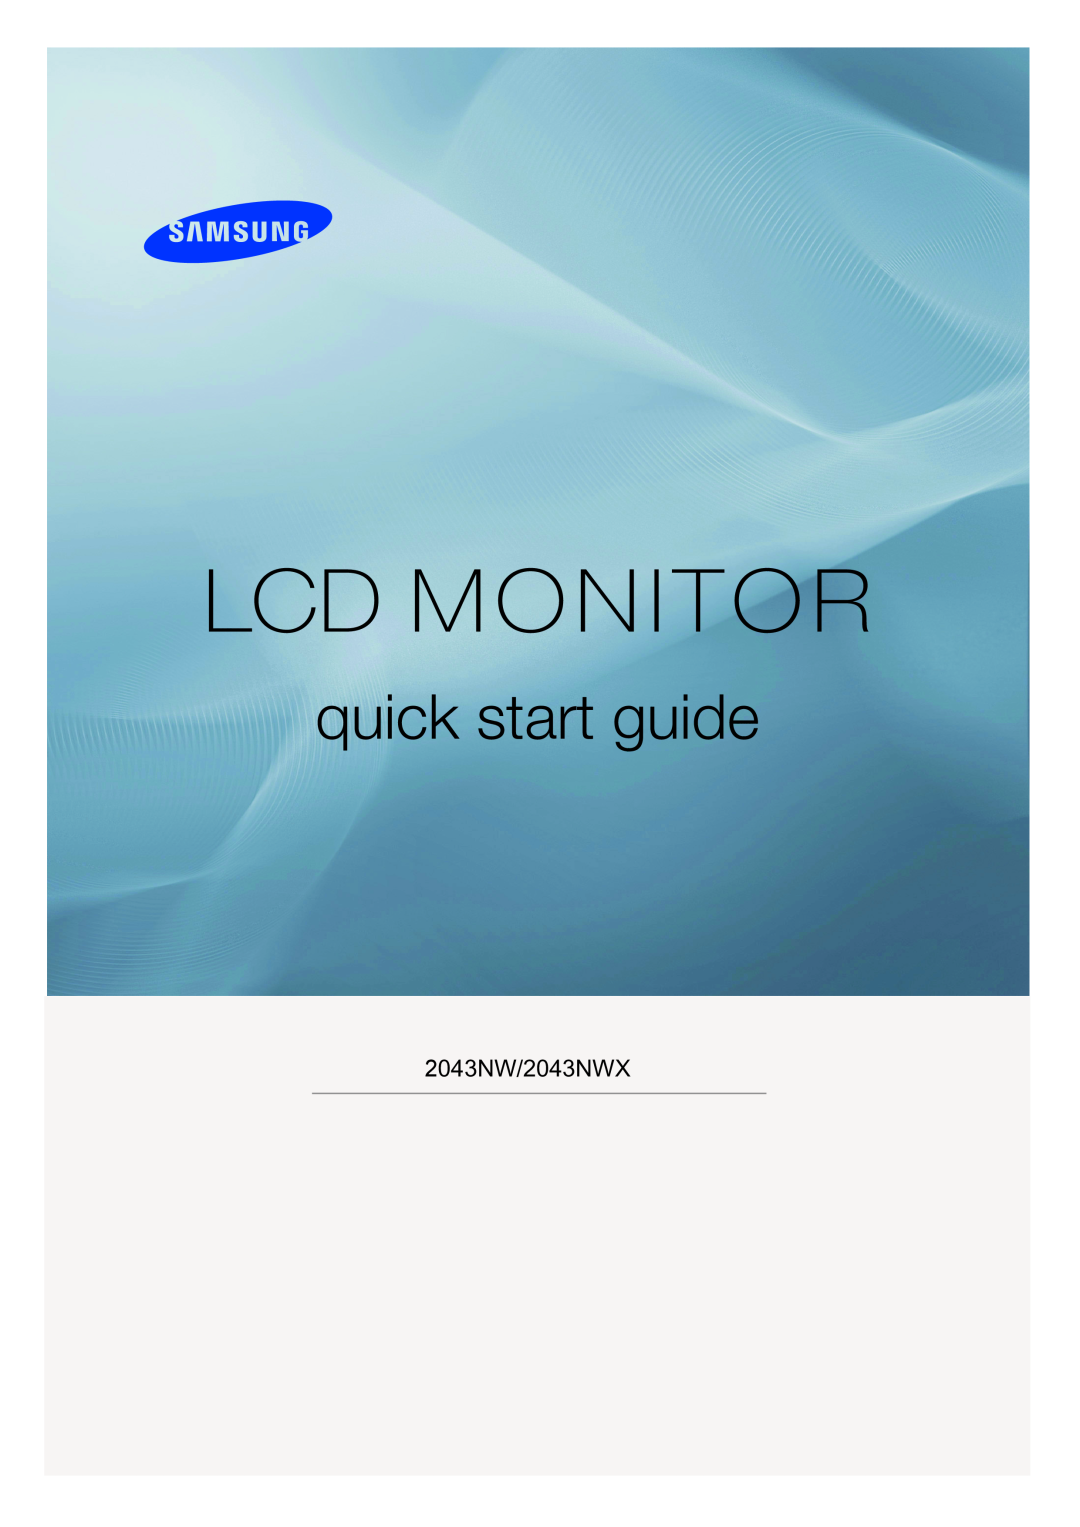 Samsung LS20MYNKBB/EDC, LS20MYNKB/EDC, LS20MYNKF/EDC, LS20MYNKS/EDC manual Lcd Monitor, quick start guide, 2043NW/2043NWX 